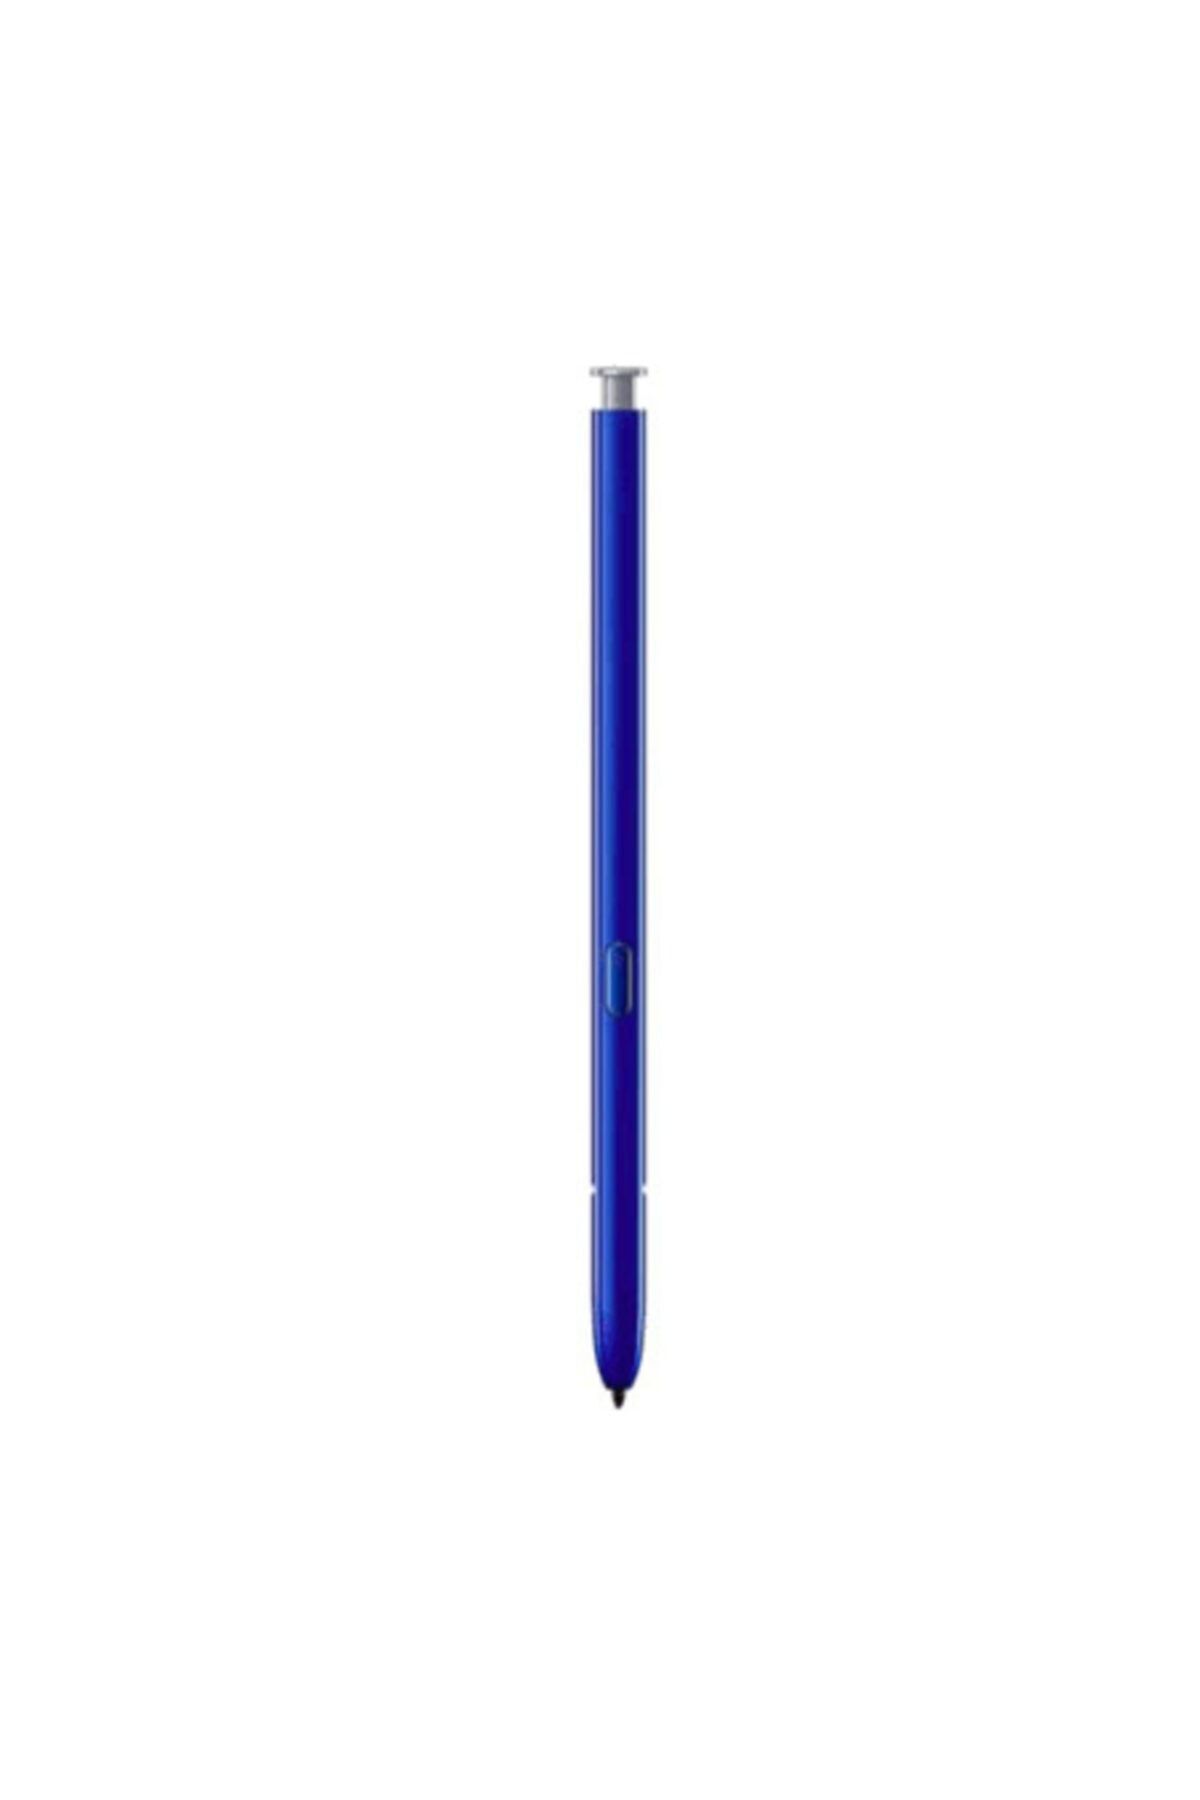 instatech Samsung Galaxy Note 10 Lite Pen Kalem - Mavi